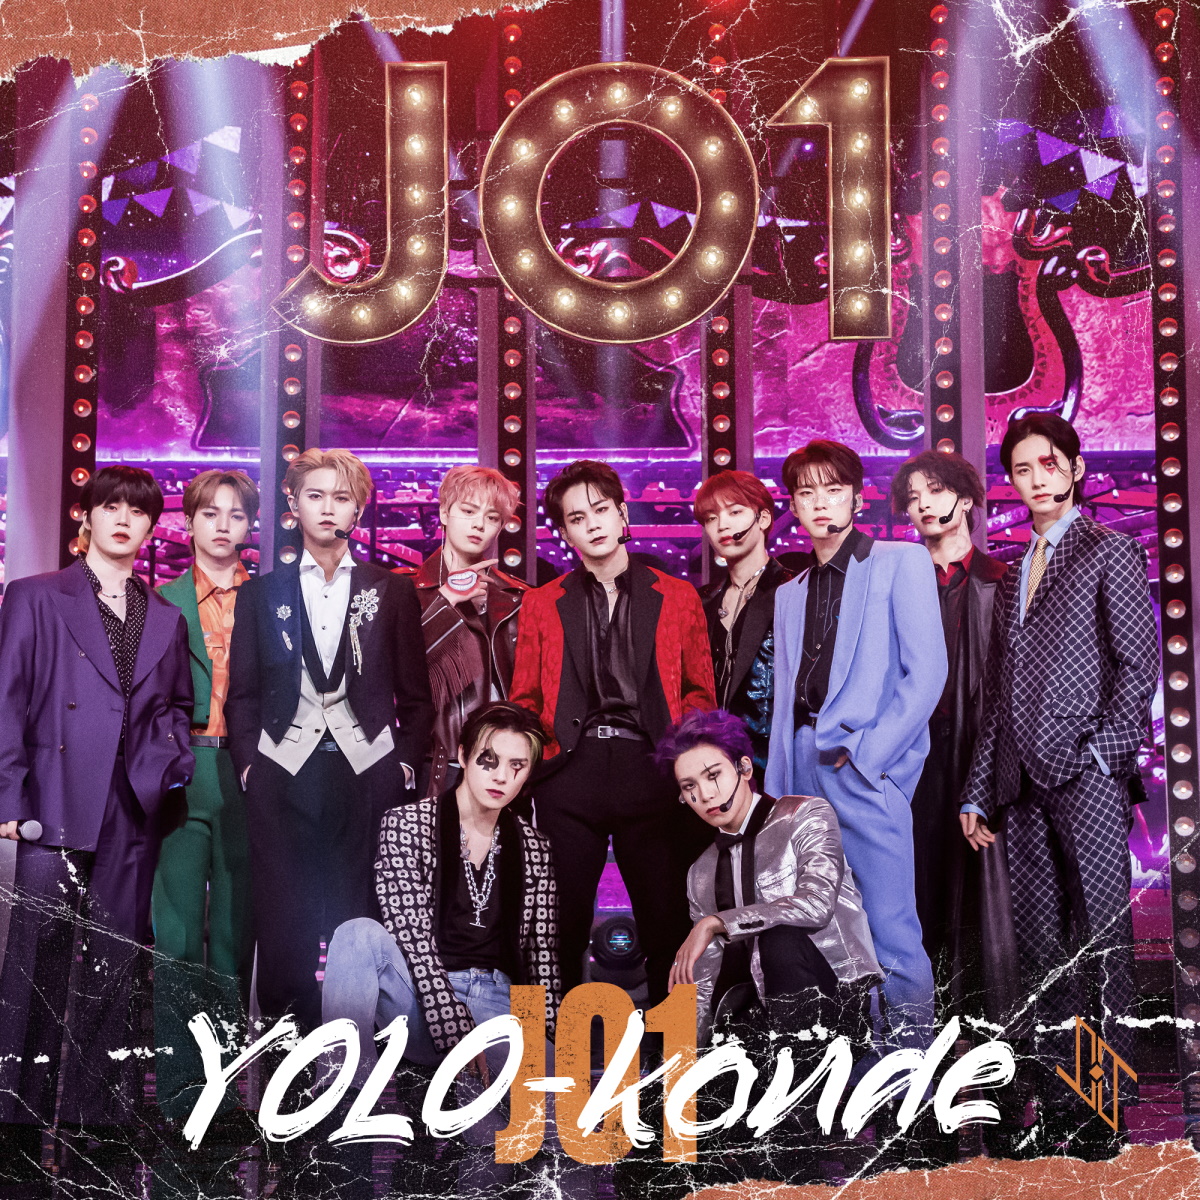 Cover for『JO1 - YOLO-konde』from the release『YOLO-konde』